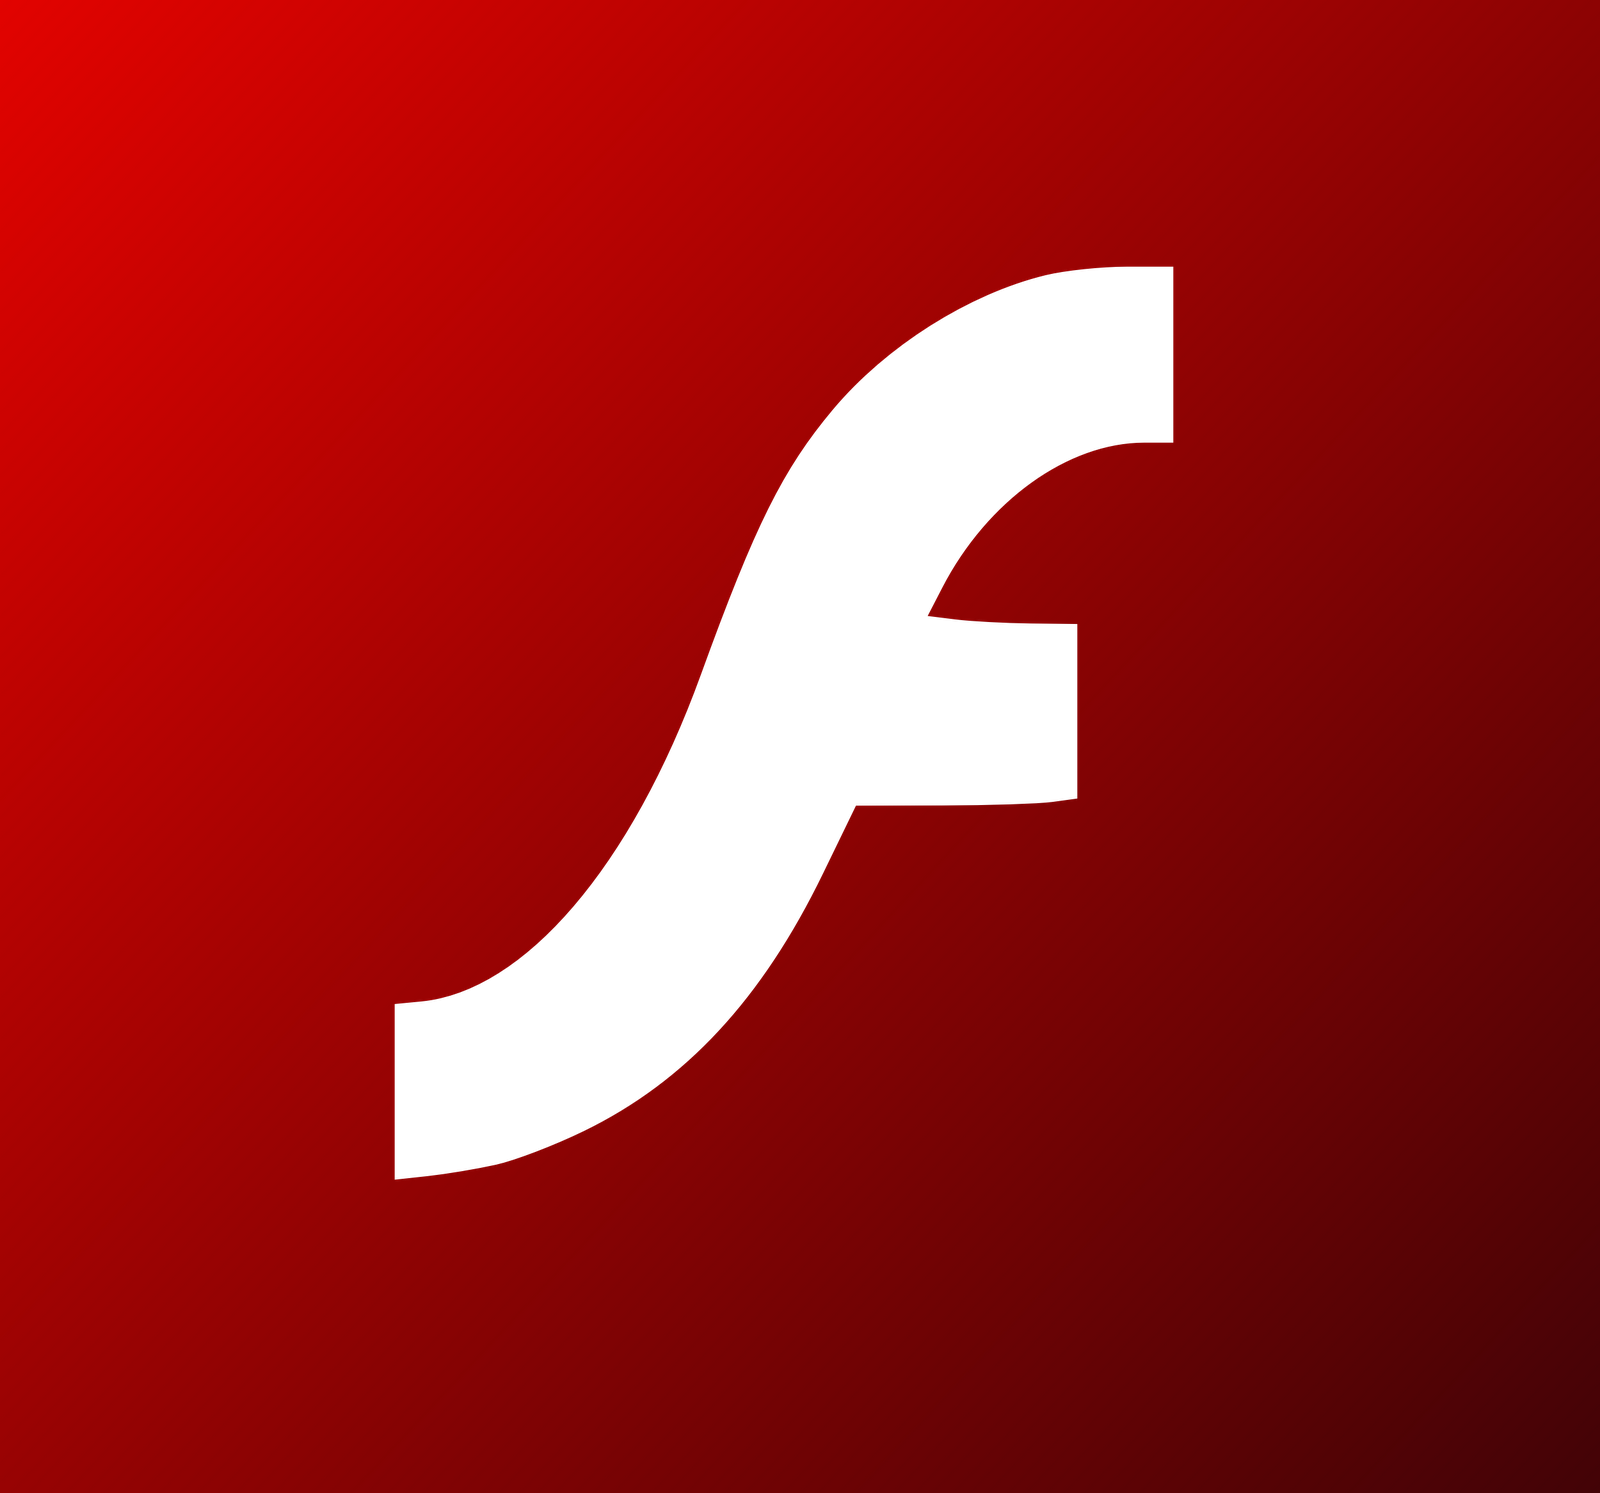 adobe flash player full version free download for windows xp